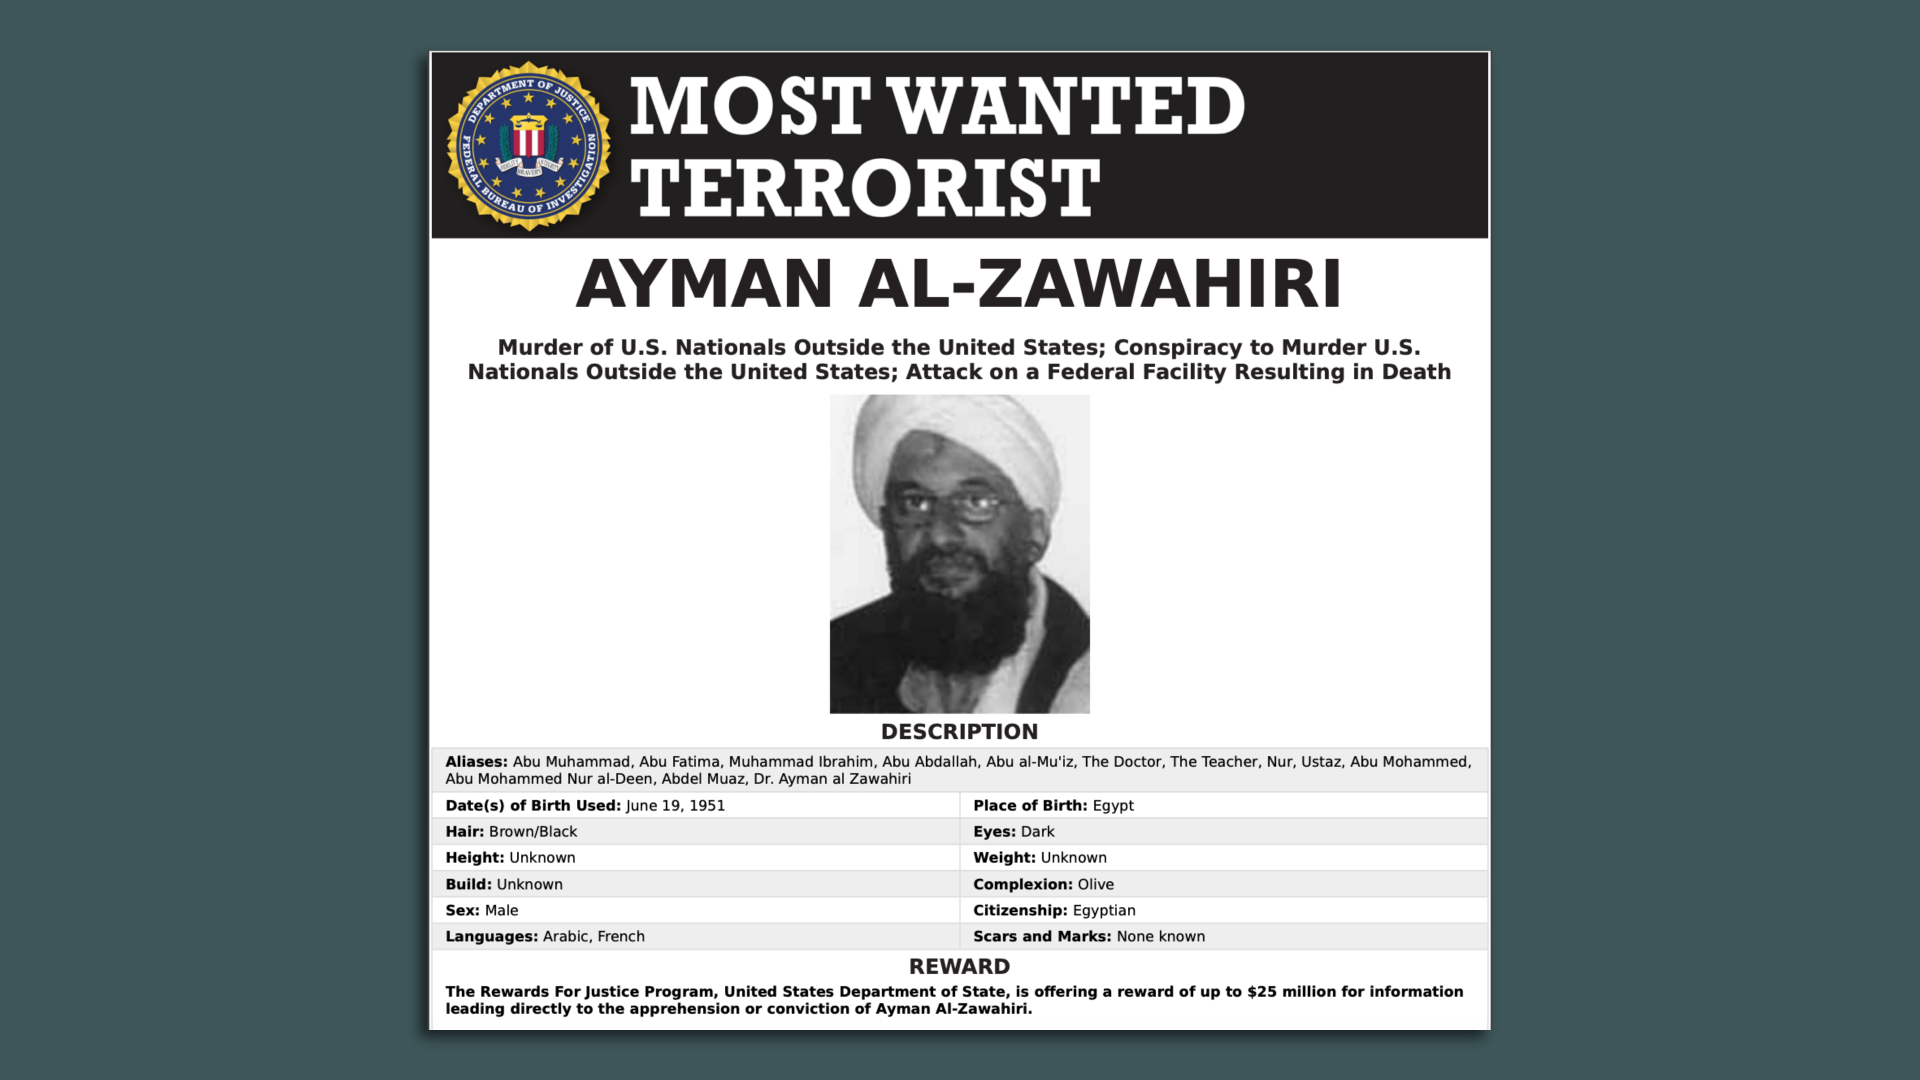 Photo of an FBI "Most wanted terrorist" sign showing Ayman al-Zawahiri's mug shot